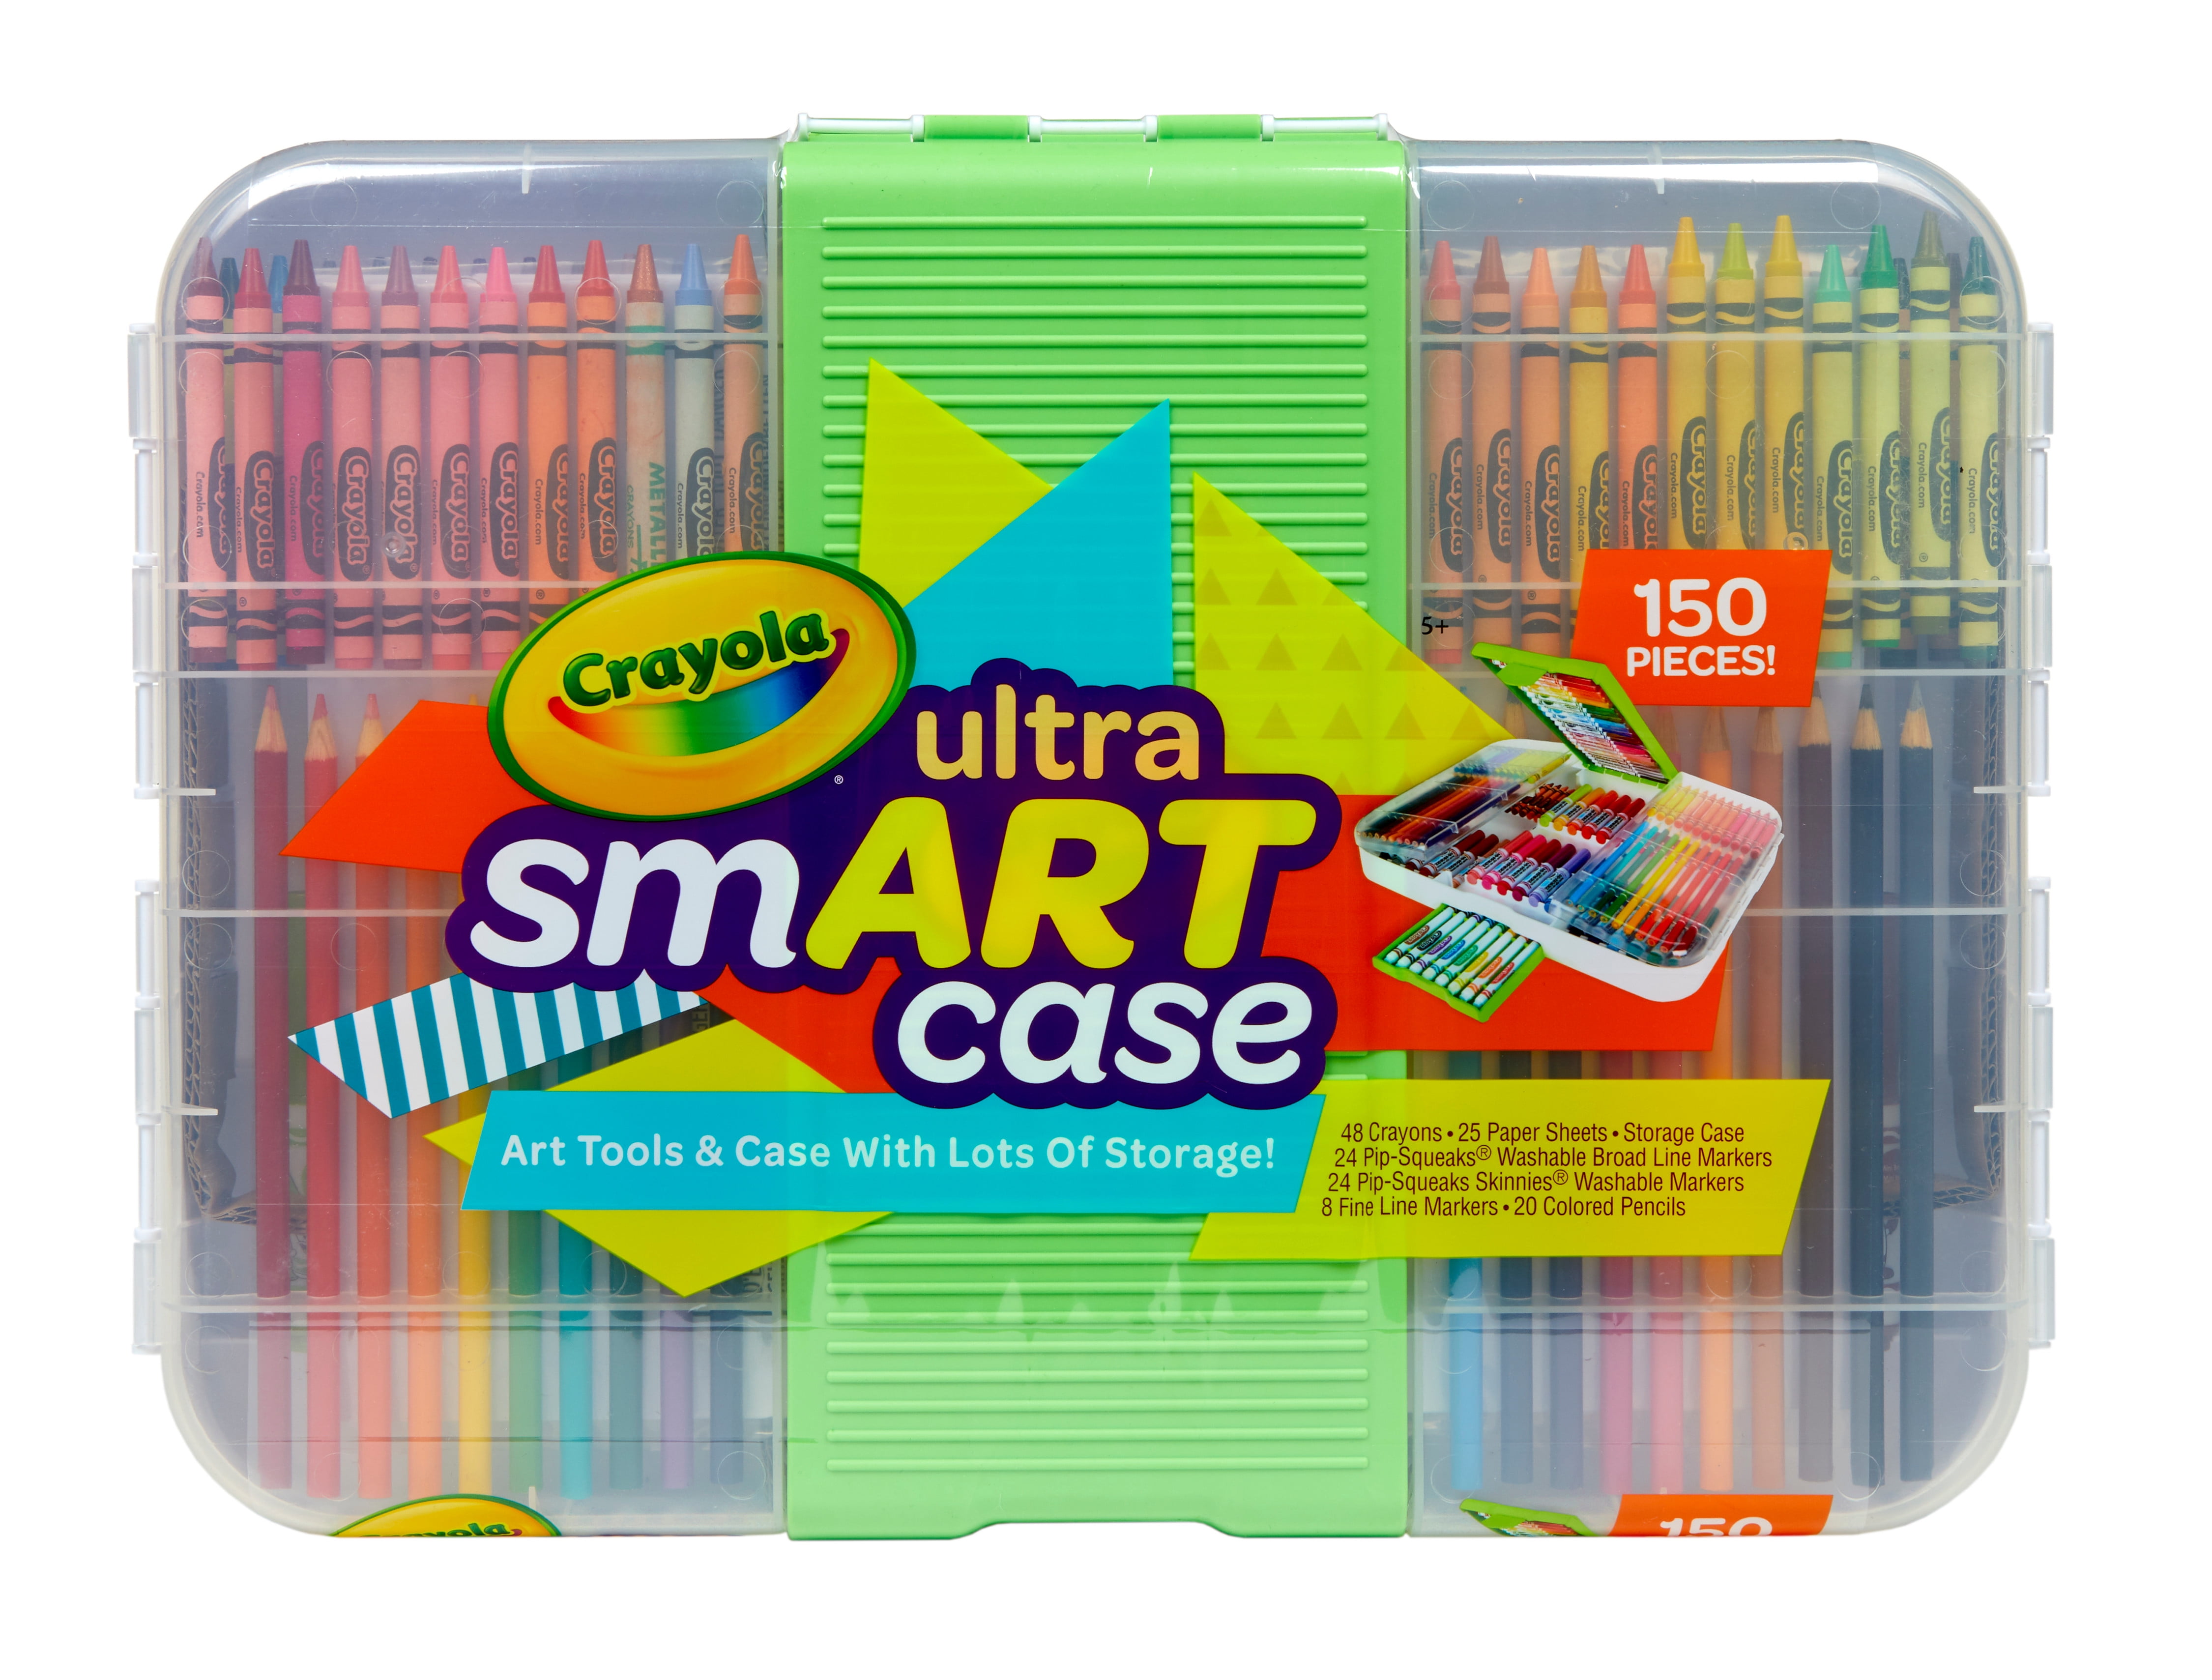  Upper Midland Products Crayon Case- Quality Crayon